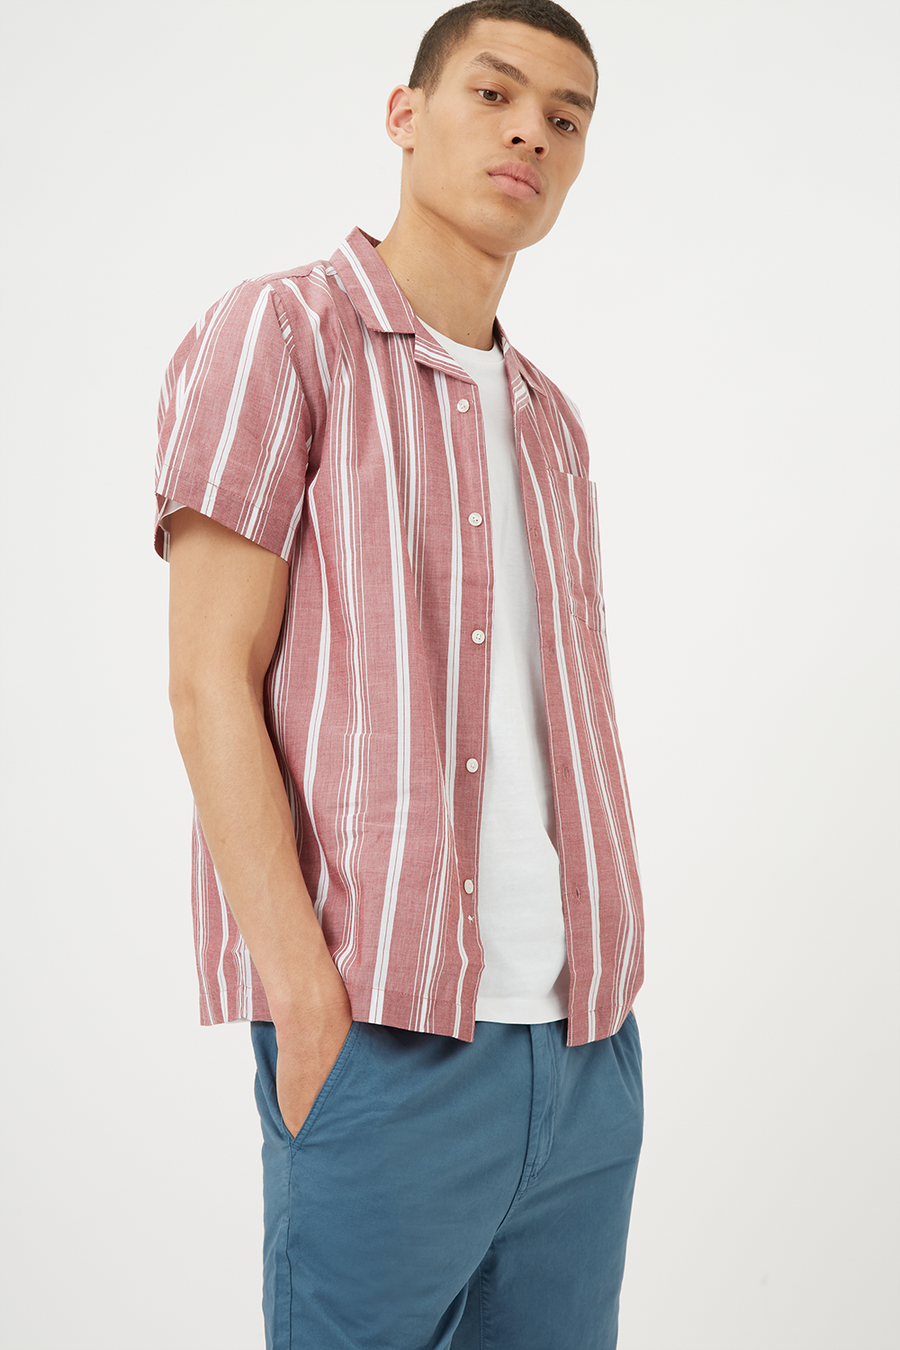 Burgundy Stripe Shirt